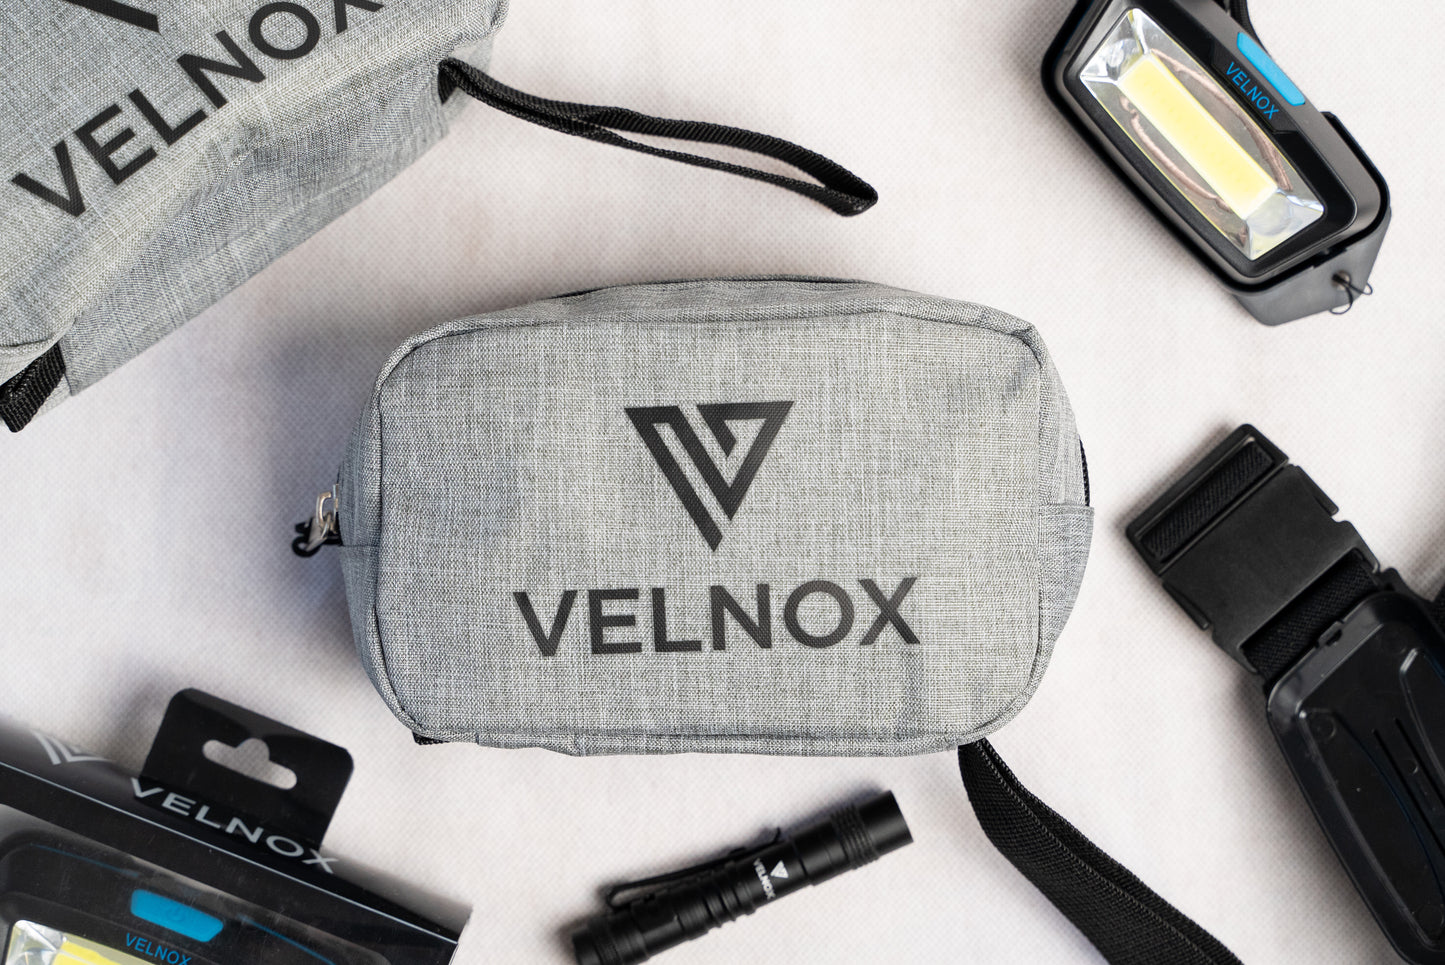 Velnox Gear Bag